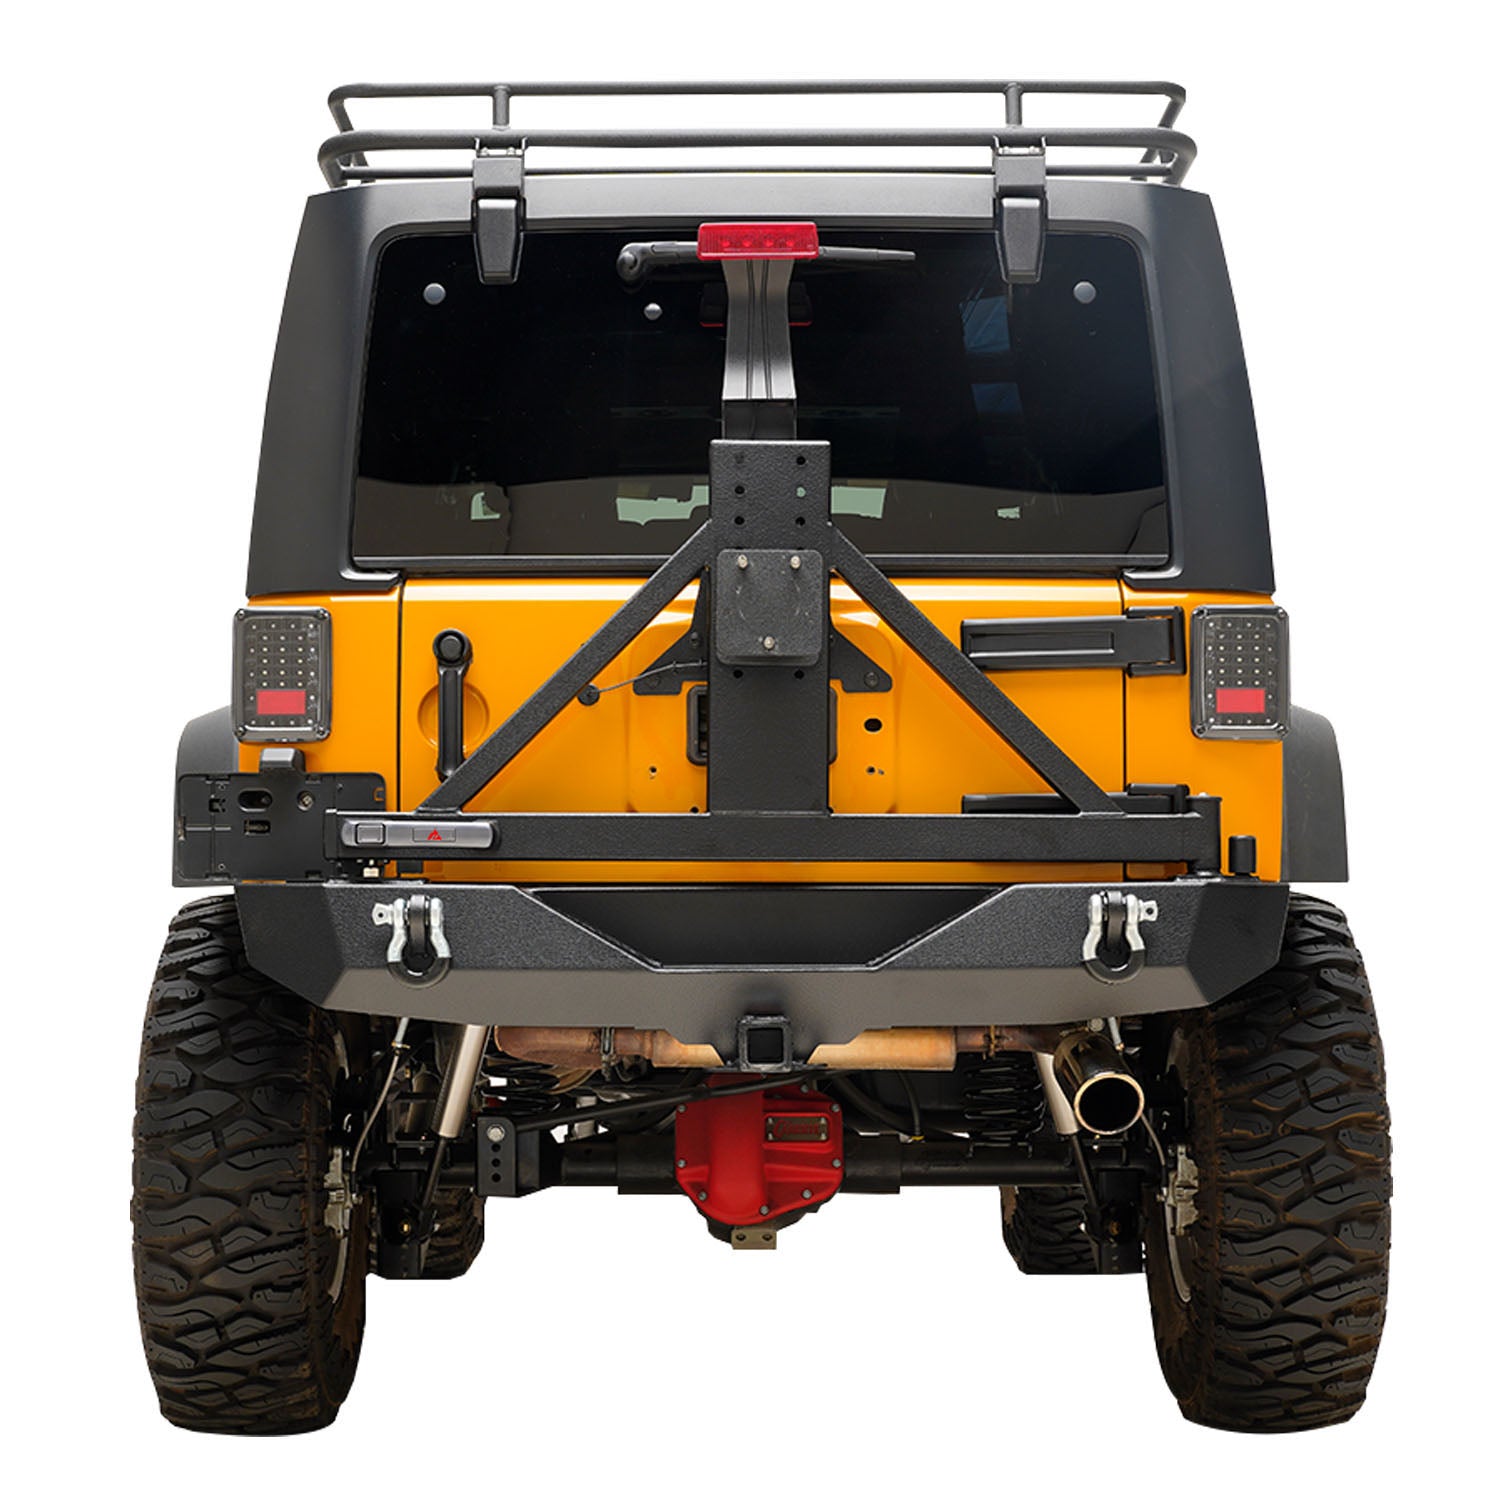 07-18 Jeep Wrangler JK Body Width Rear Bumper with SureGrip Tire Carrier (51-0315)